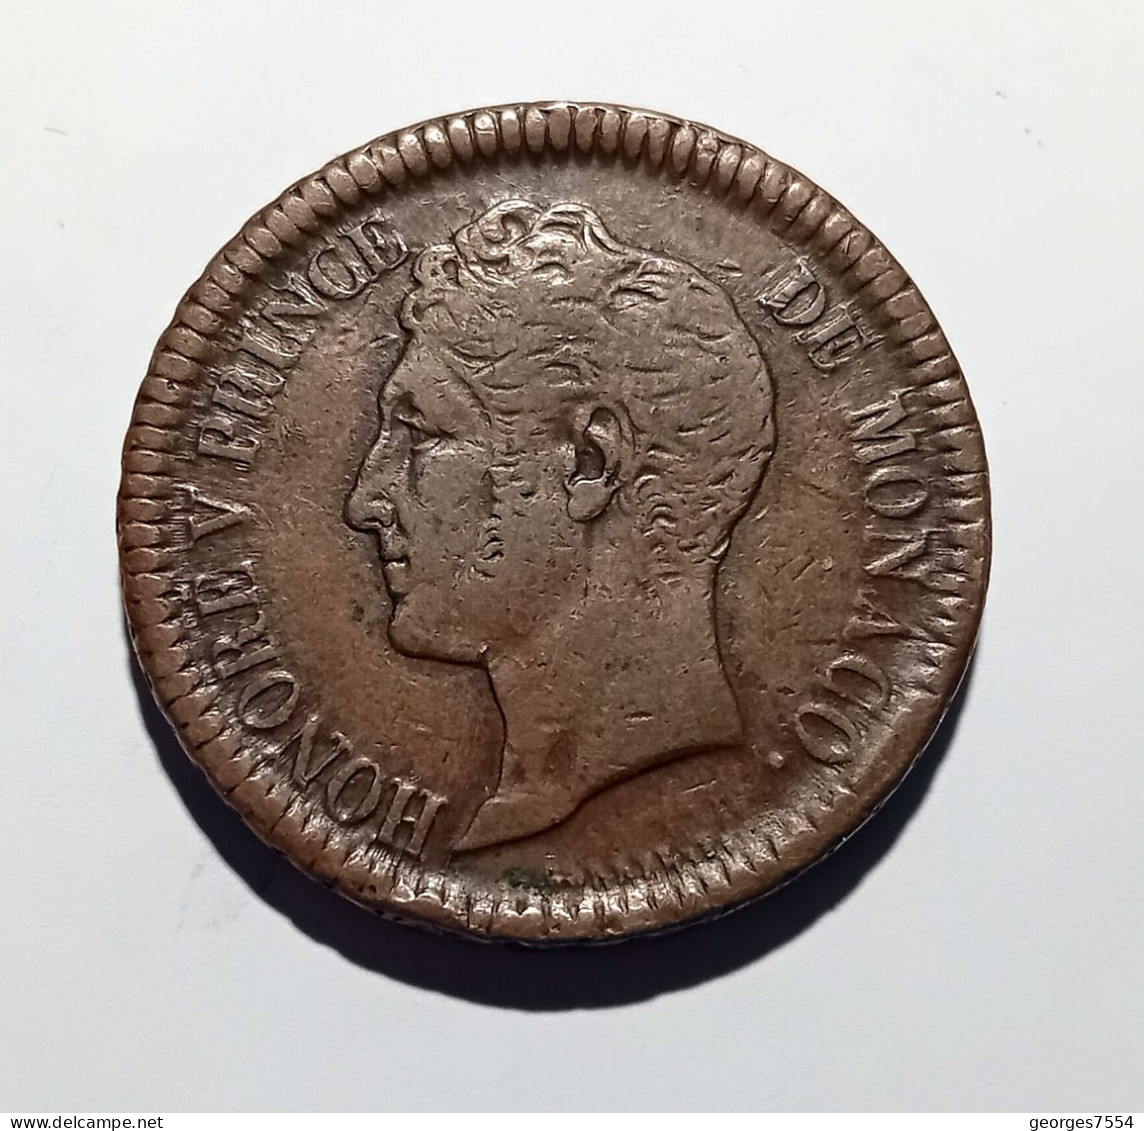 MONACO - UN DECIME 1838 C - Bronze TTB - Charles III.